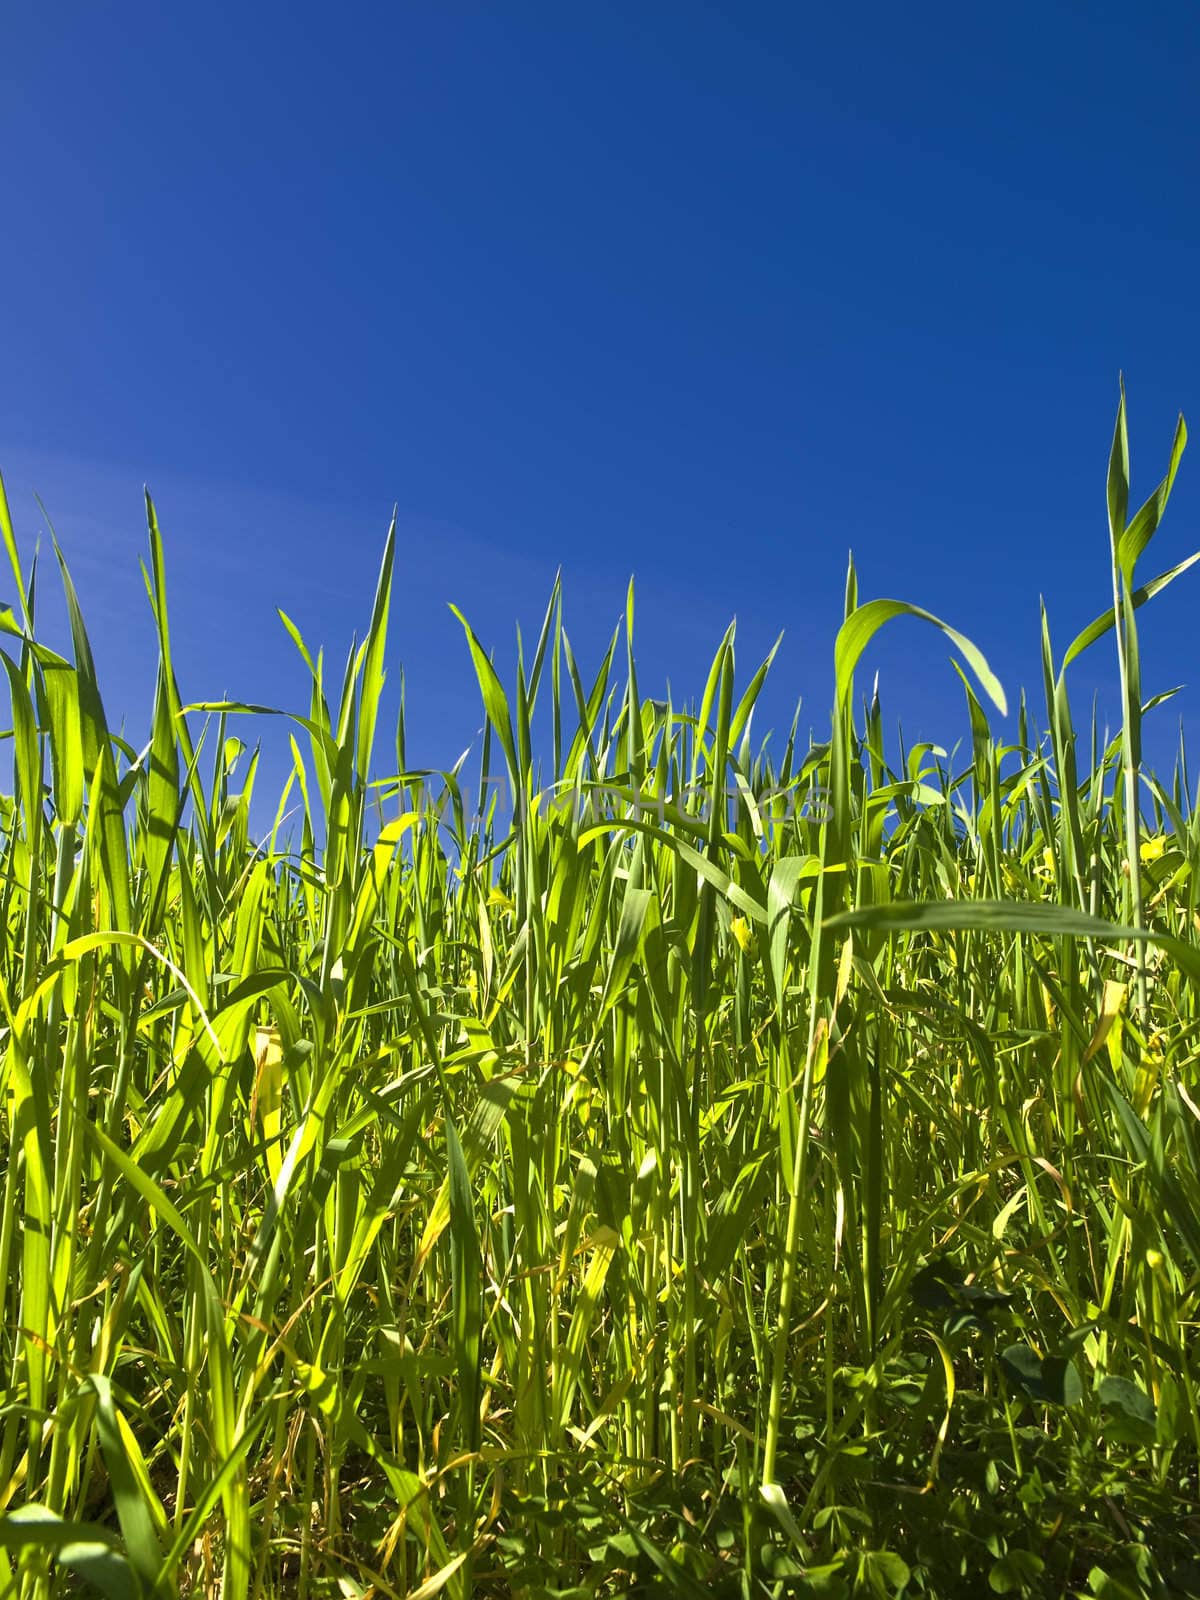 Vivid green blades of grass over a deep blue sky